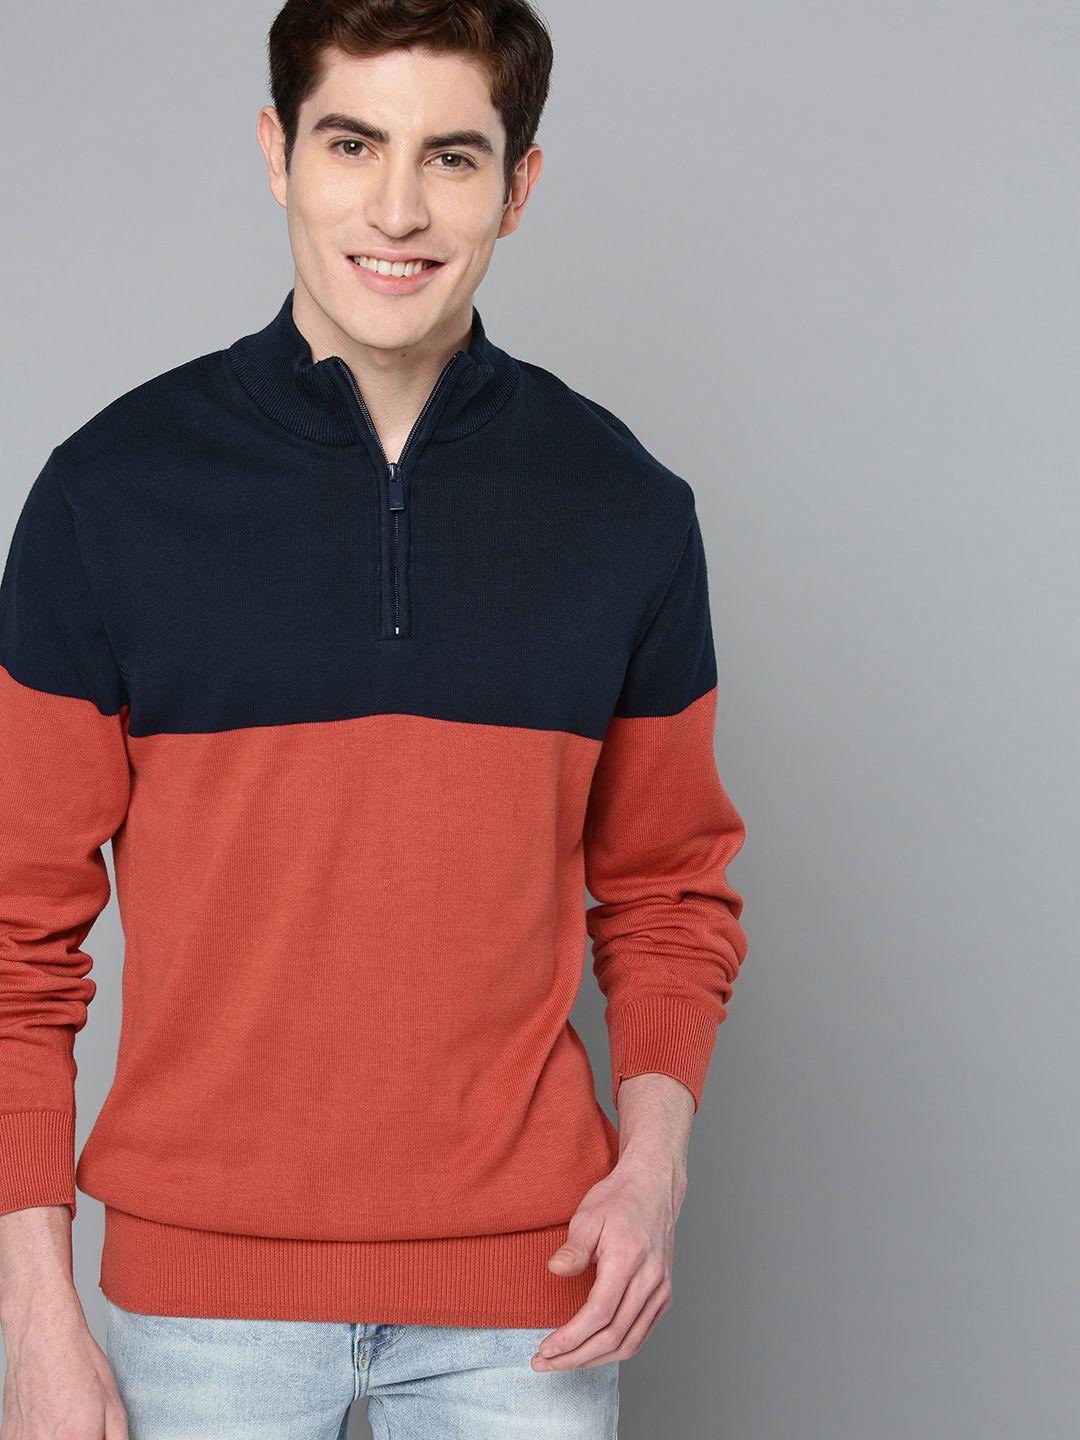 mast-&-harbour-men-navy-blue-&-orange-colourblocked-sweater